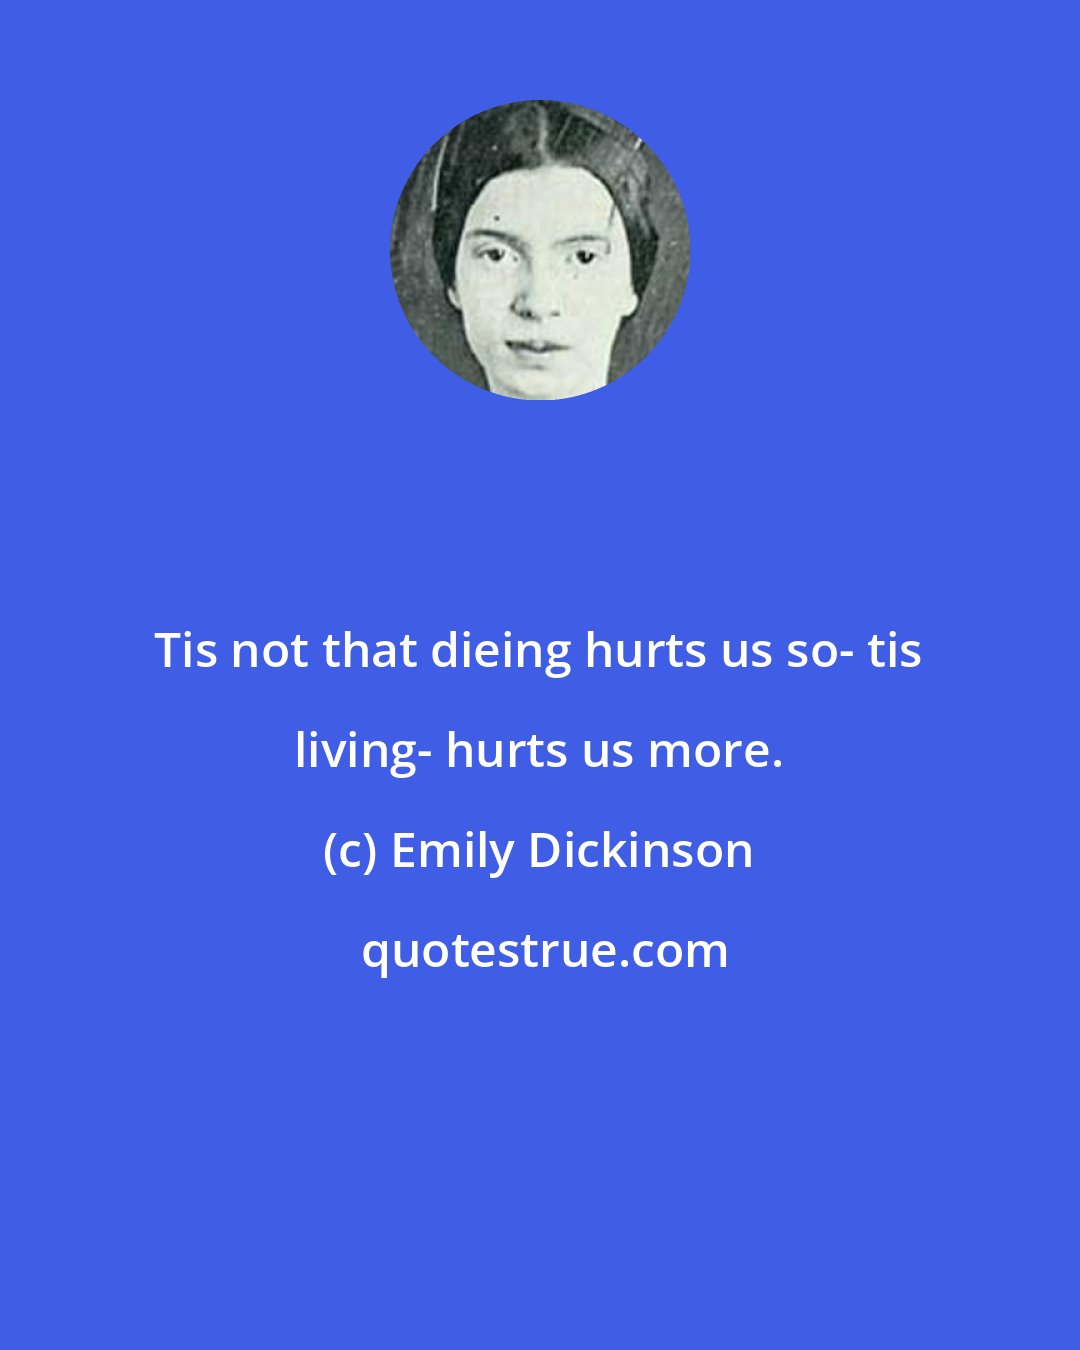 Emily Dickinson: Tis not that dieing hurts us so- tis living- hurts us more.